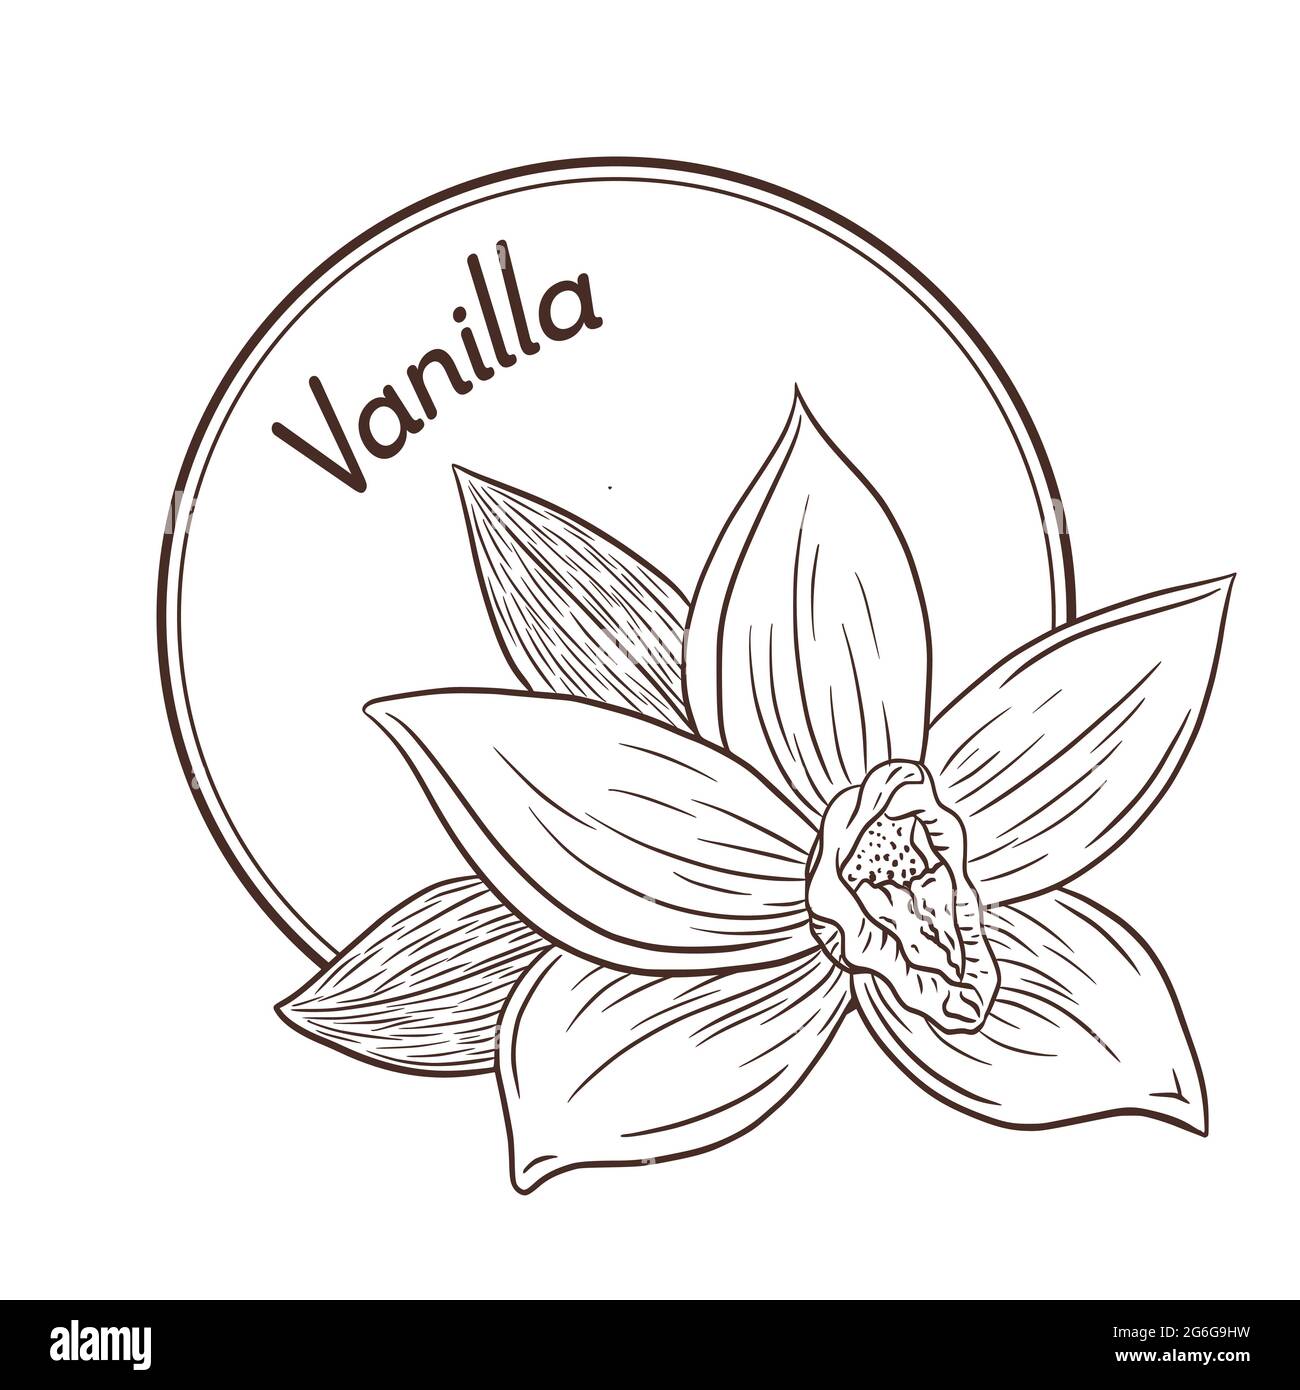 Logo und Emblem im Vintage-Stil mit Vanilleblume. Linear Style Food Logo, Emblem, Label. Gravierte Isolierte Vektorgrafik Stock Vektor